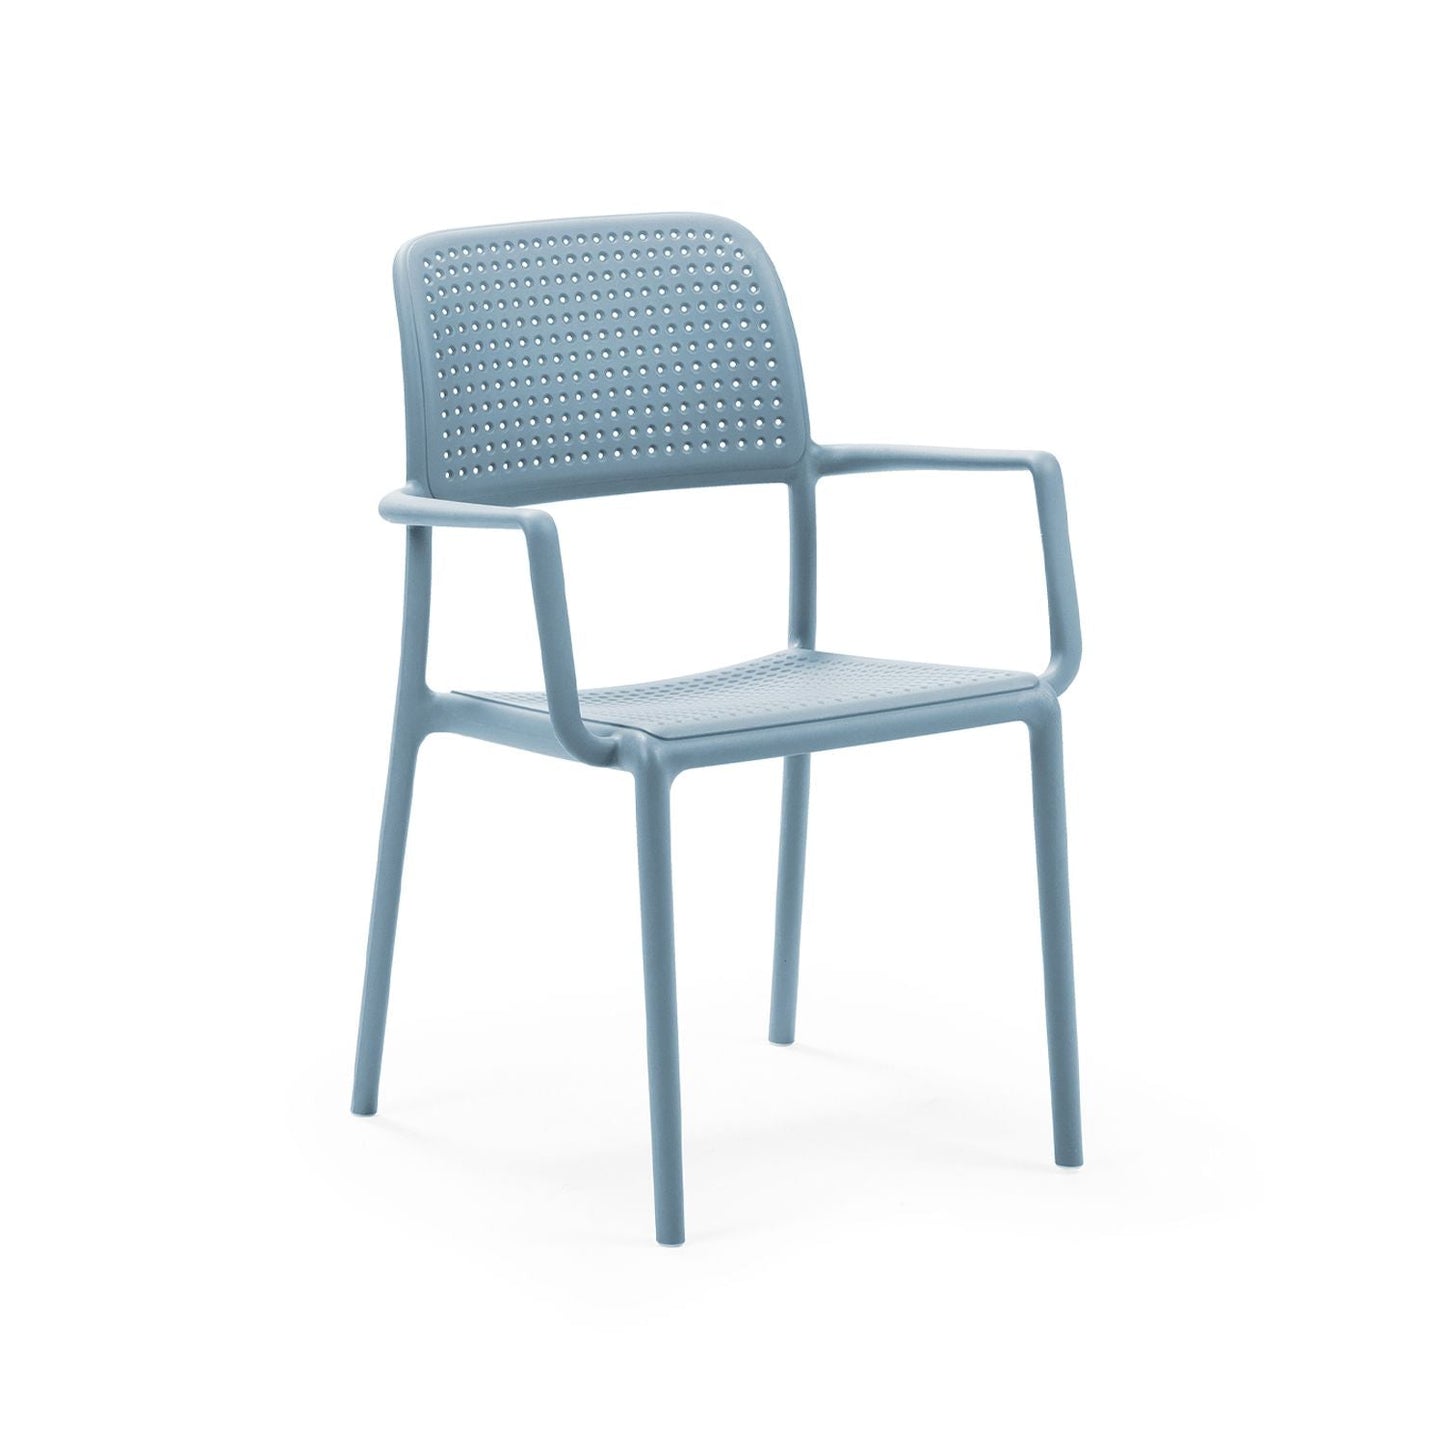 Bora Garden Chair By Nardi - Set Of 6 - Powder Blue